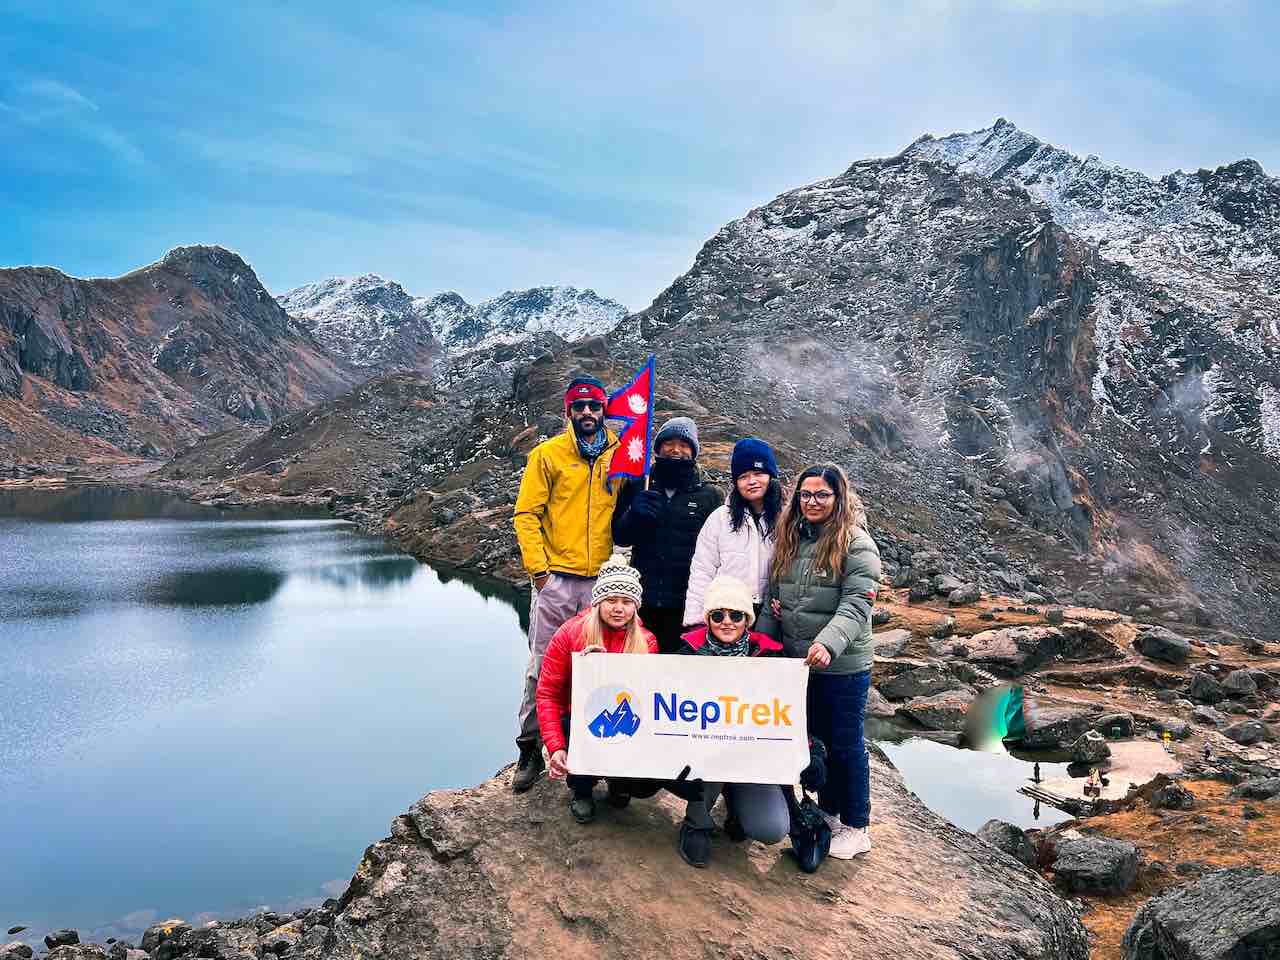 Trekkers on Gosaikunda Trek with NepTrek, posing for a photograph at lakeside viewpoint